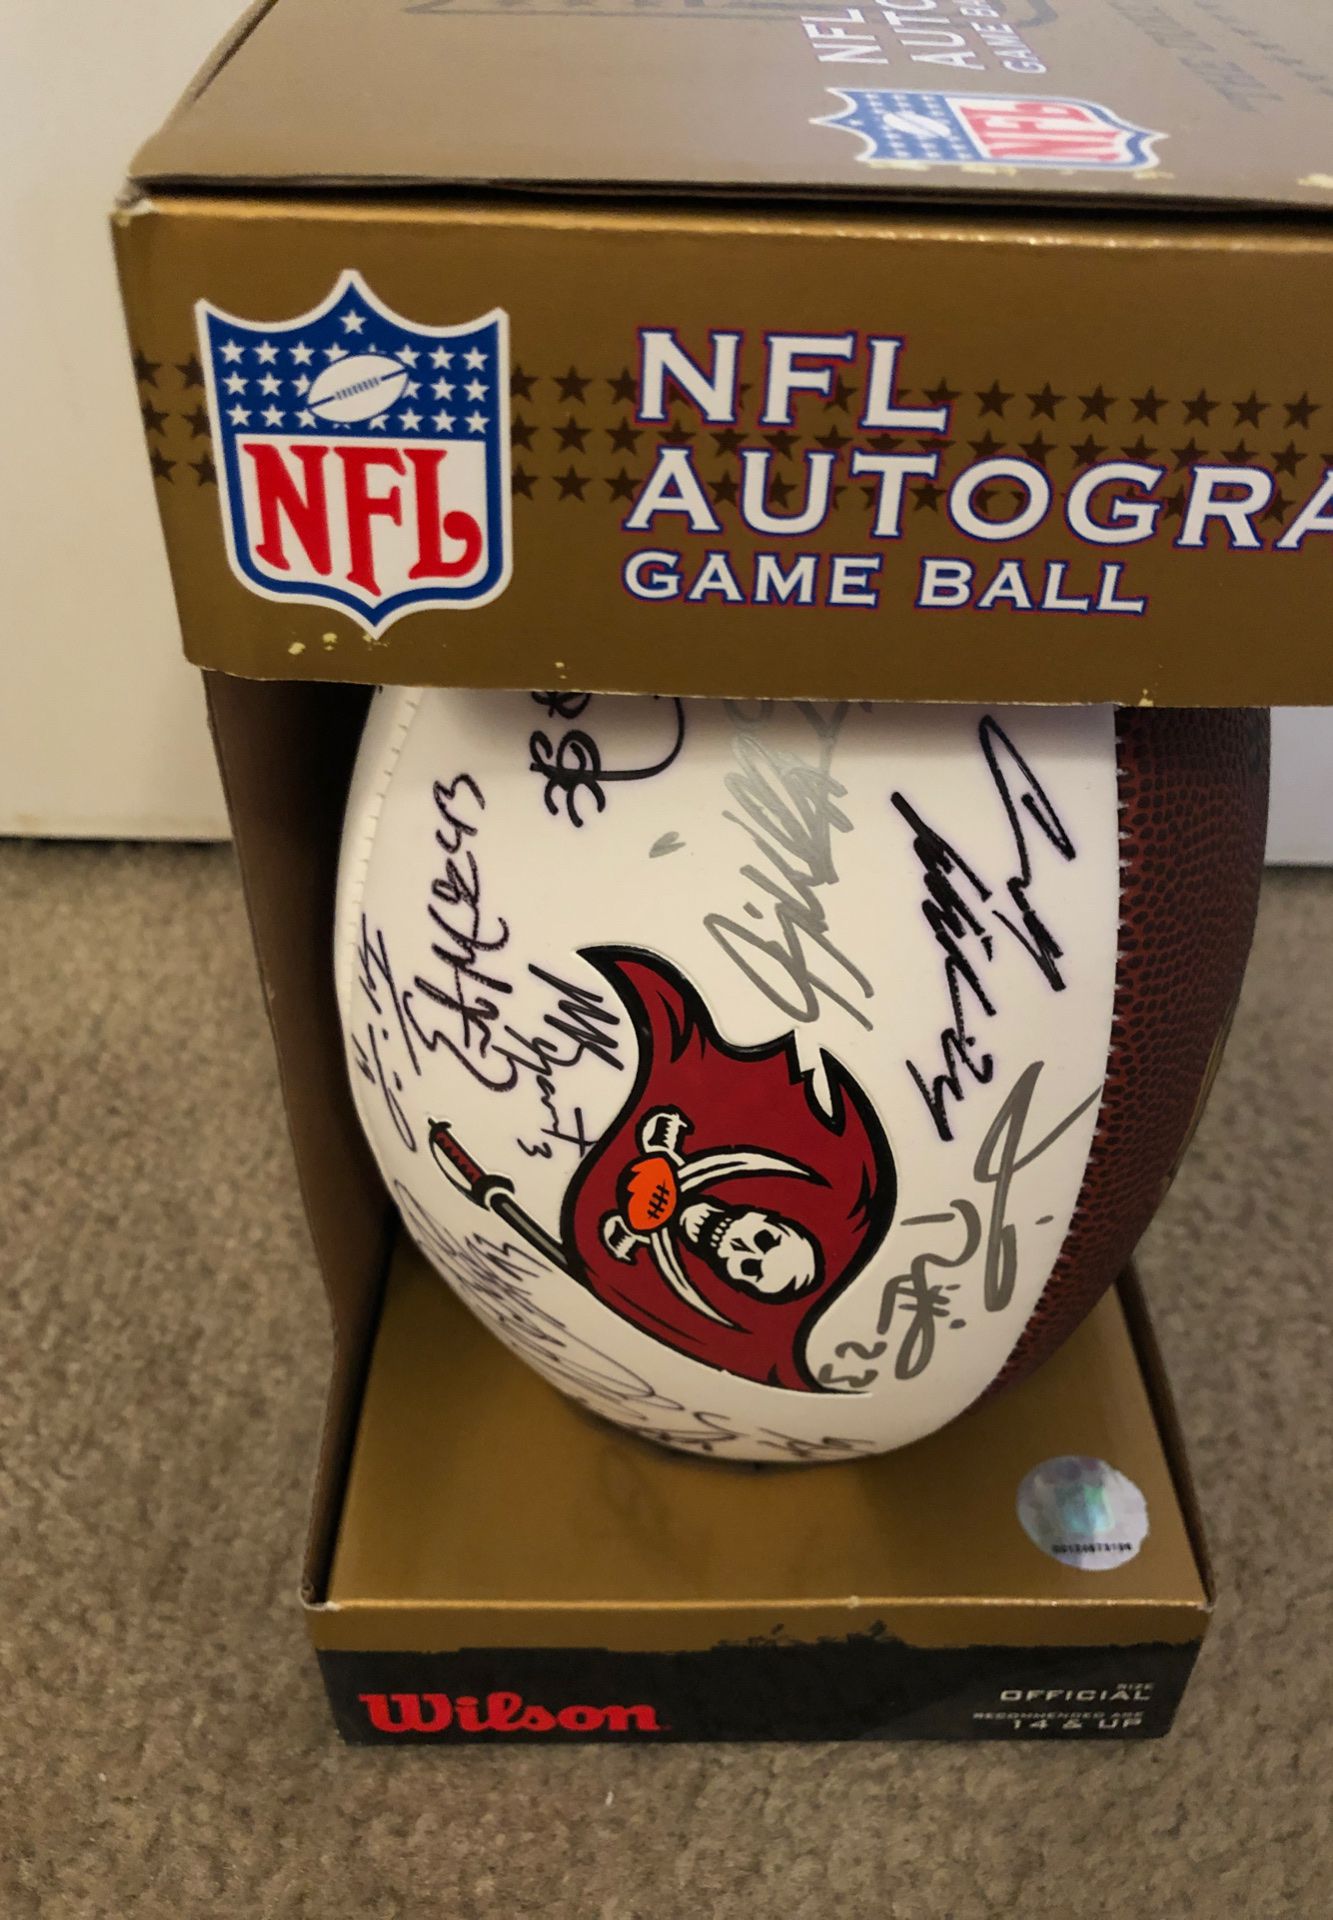 NFL Bucs autographed football